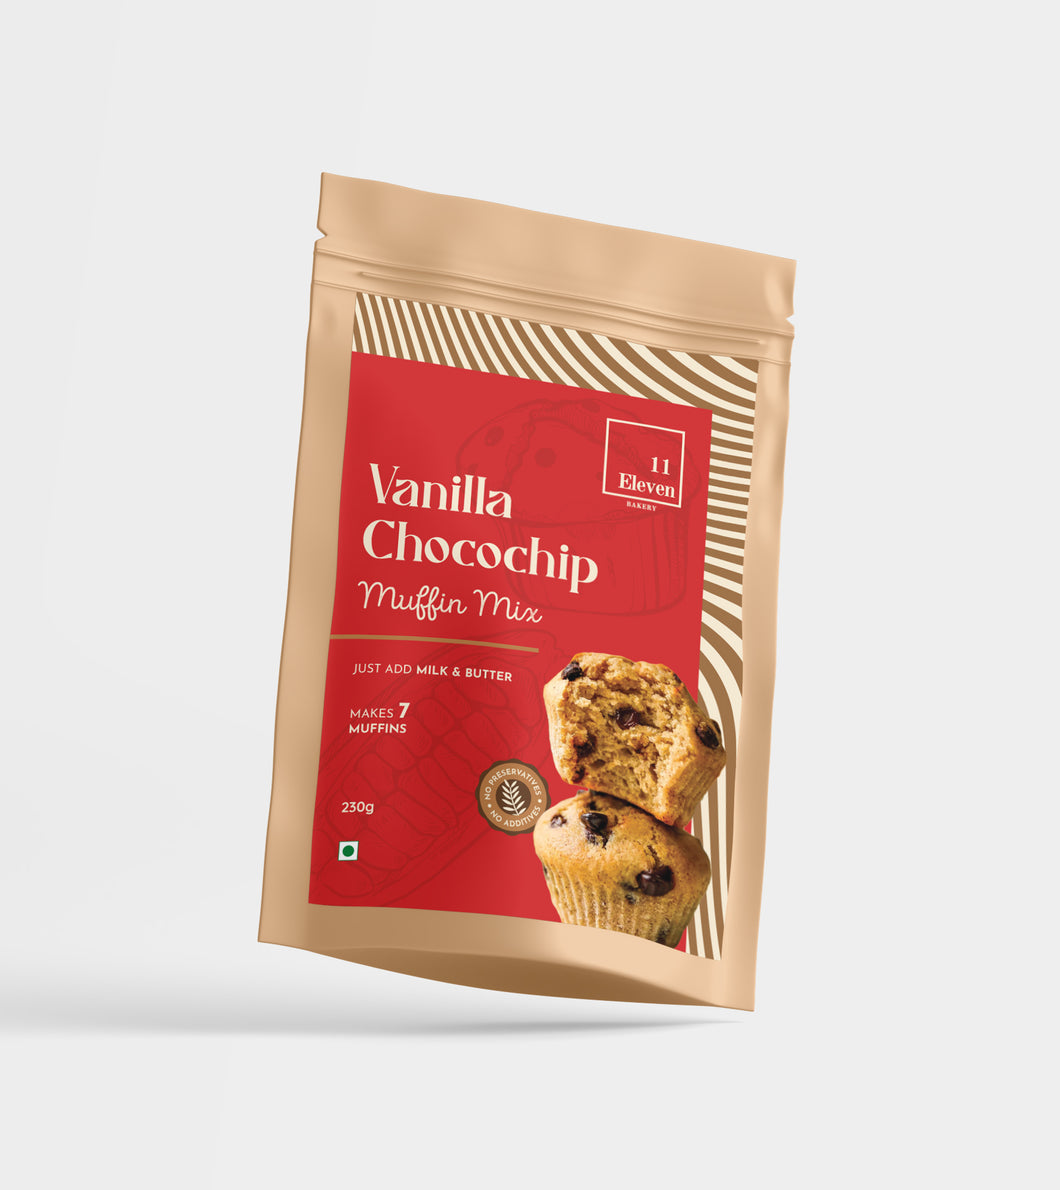 Vanilla Chocochip muffin mix